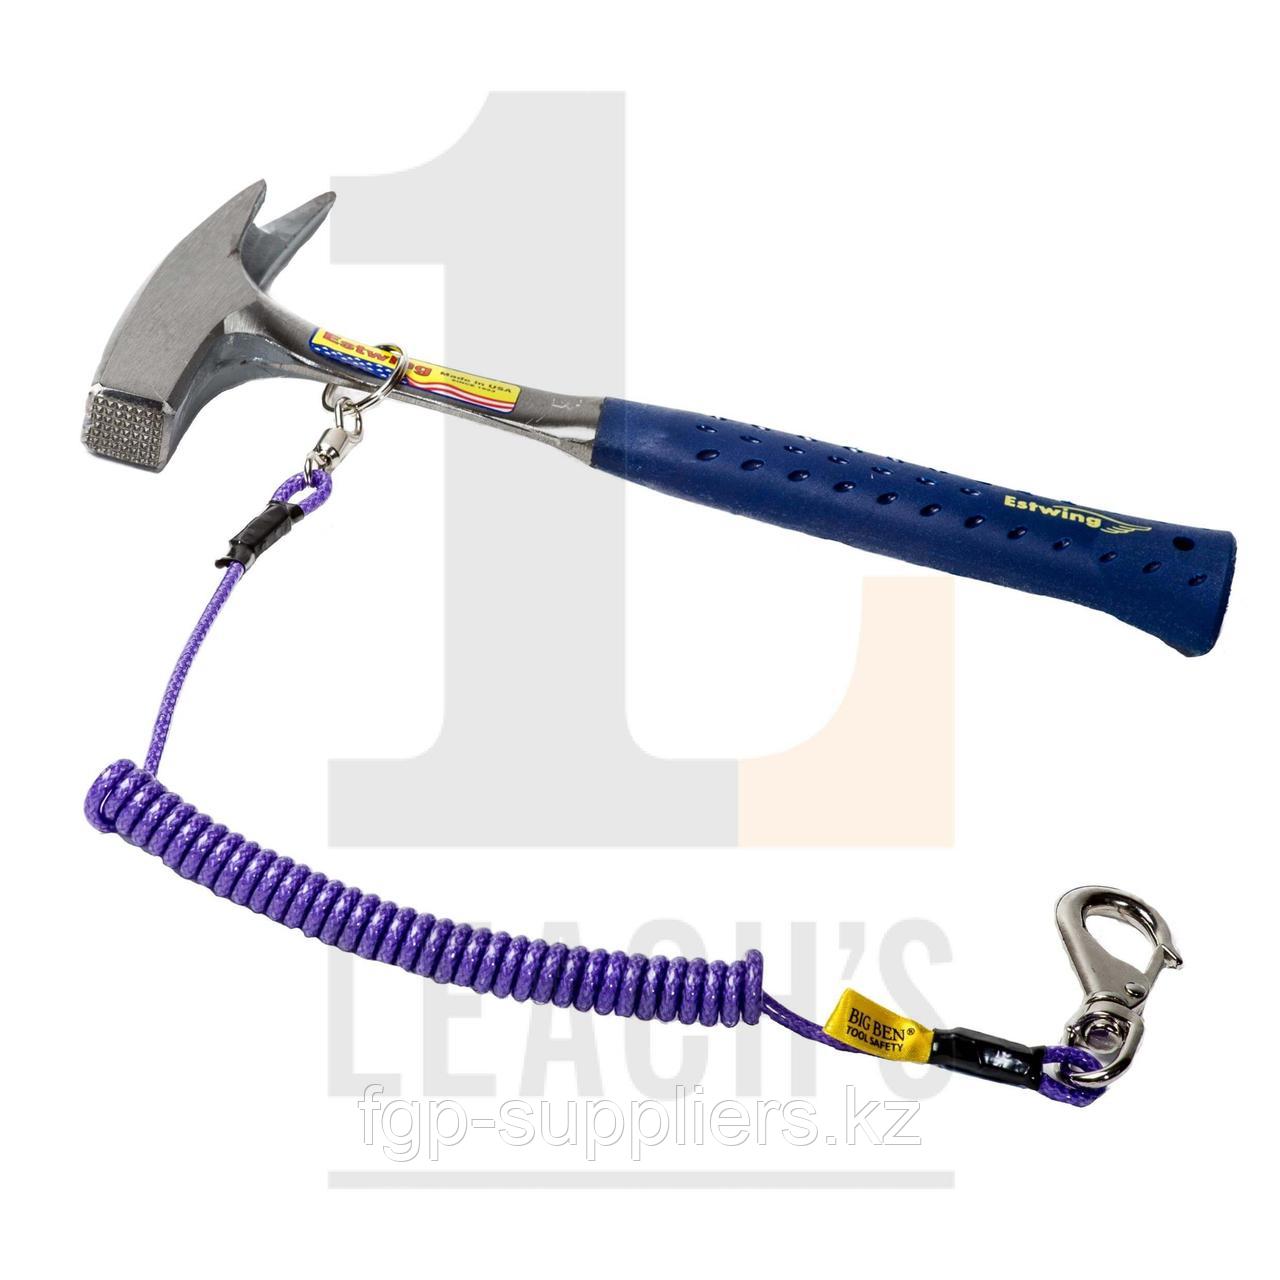 Estwing Hammer with Podger Claw - Vinyl Handle, Milled Face c/w HD Tool Safety Rope / Estwing Кровельный молоток с когтем - виниловая рукоять с